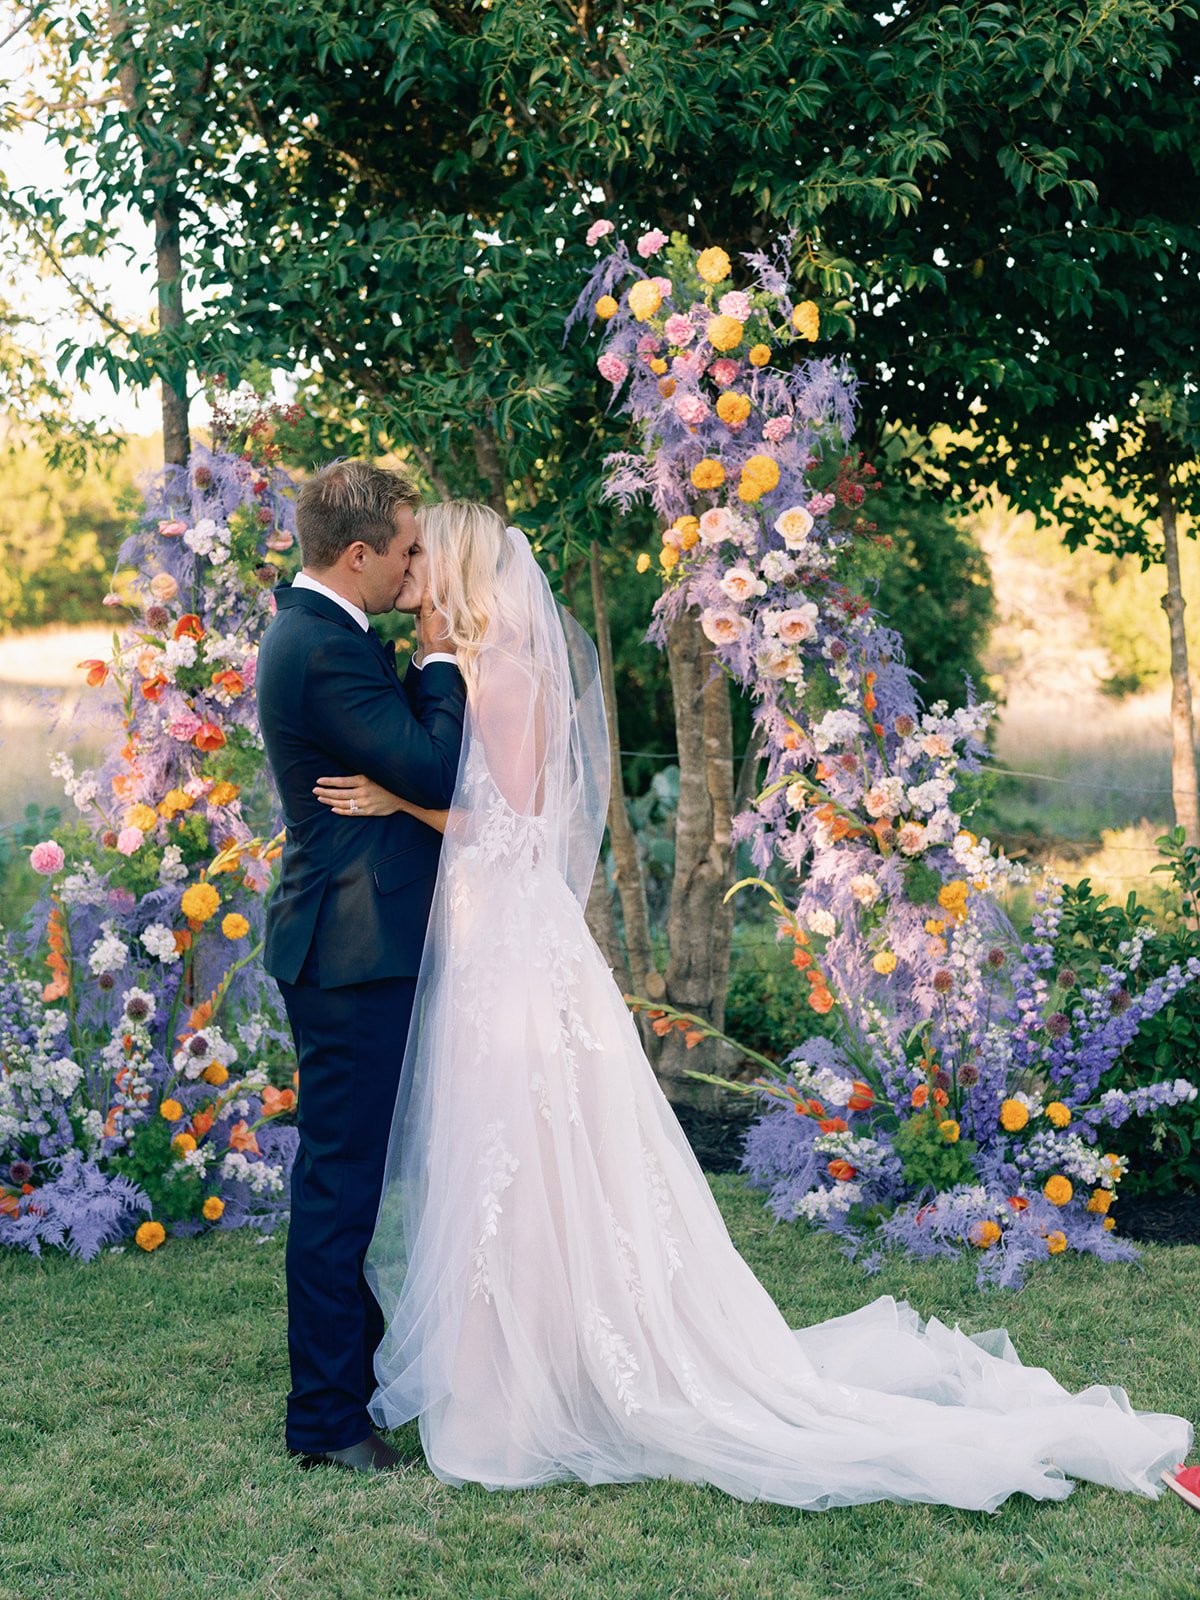 Best-Austin-Wedding-Photographers-Elopement-Film-35mm-Asheville-Santa-Barbara-Backyard-47.jpg